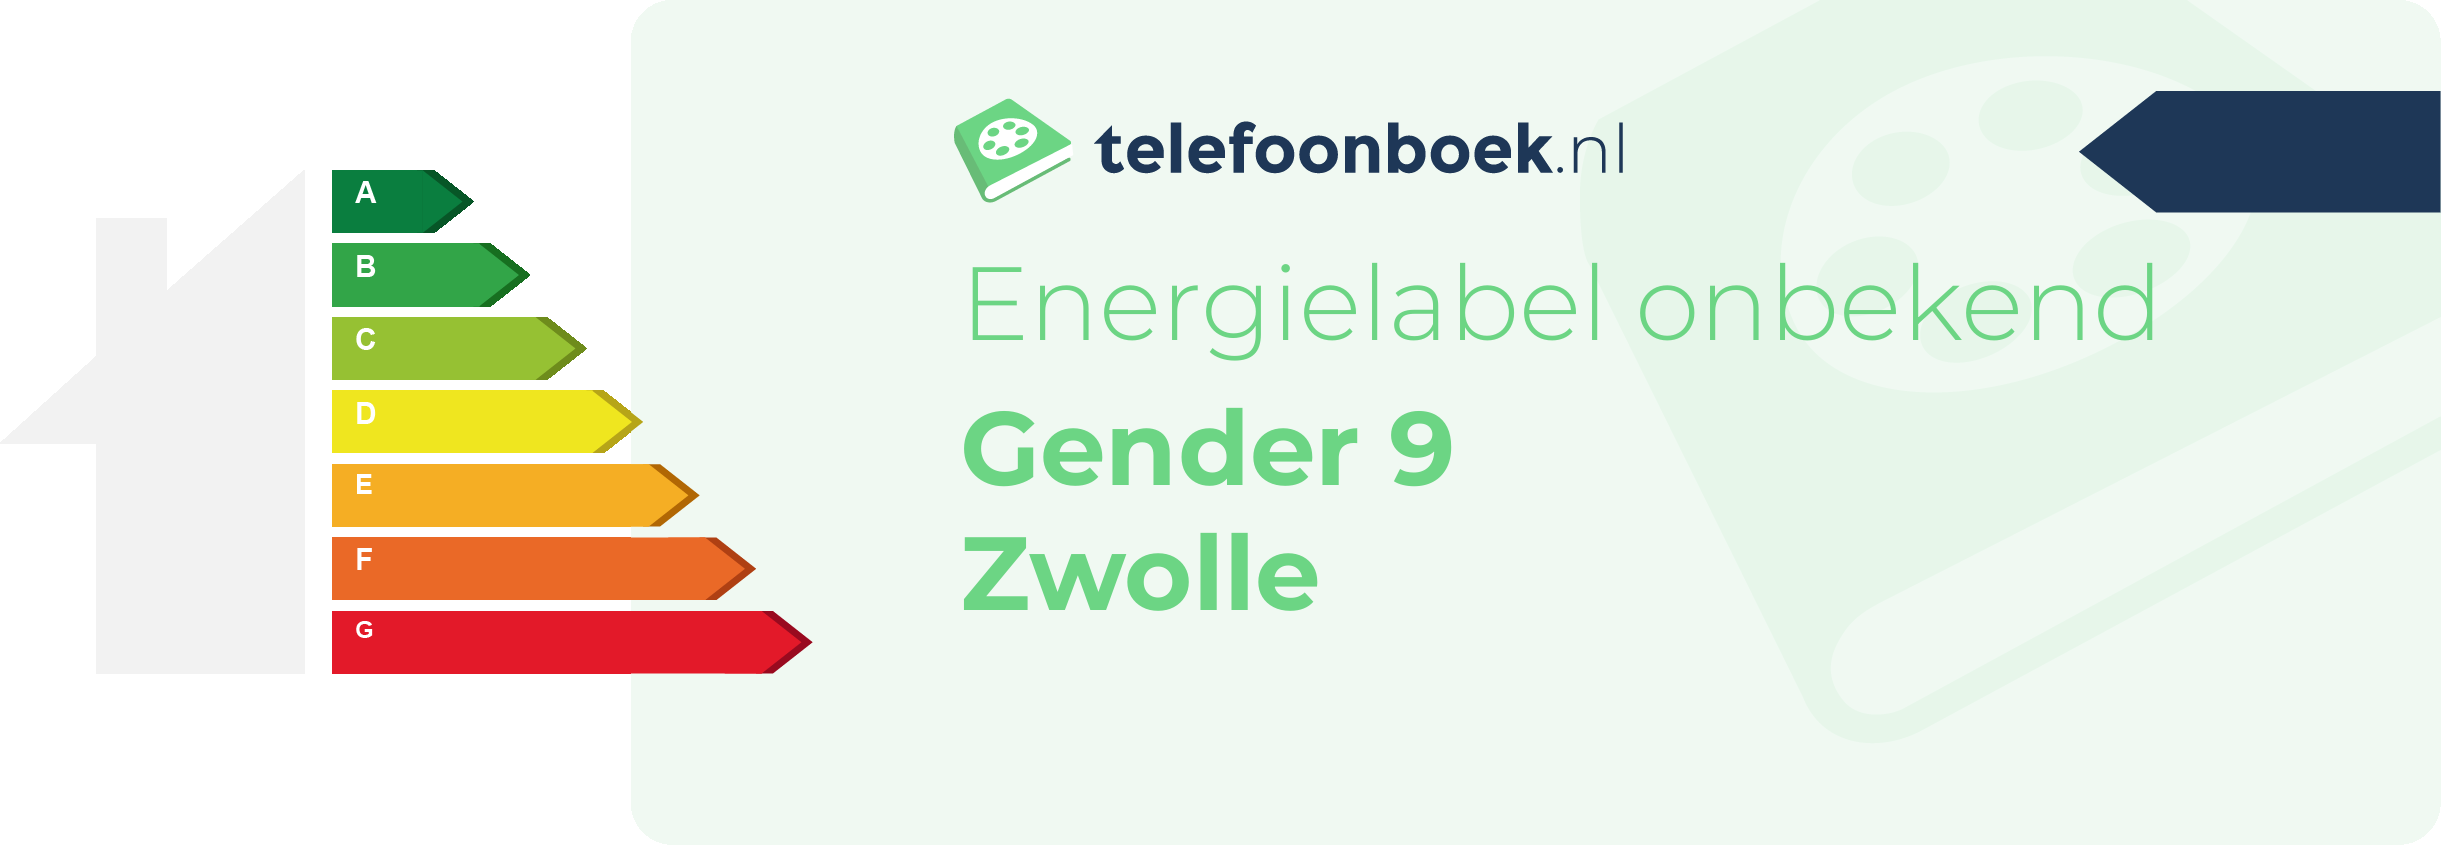 Energielabel Gender 9 Zwolle